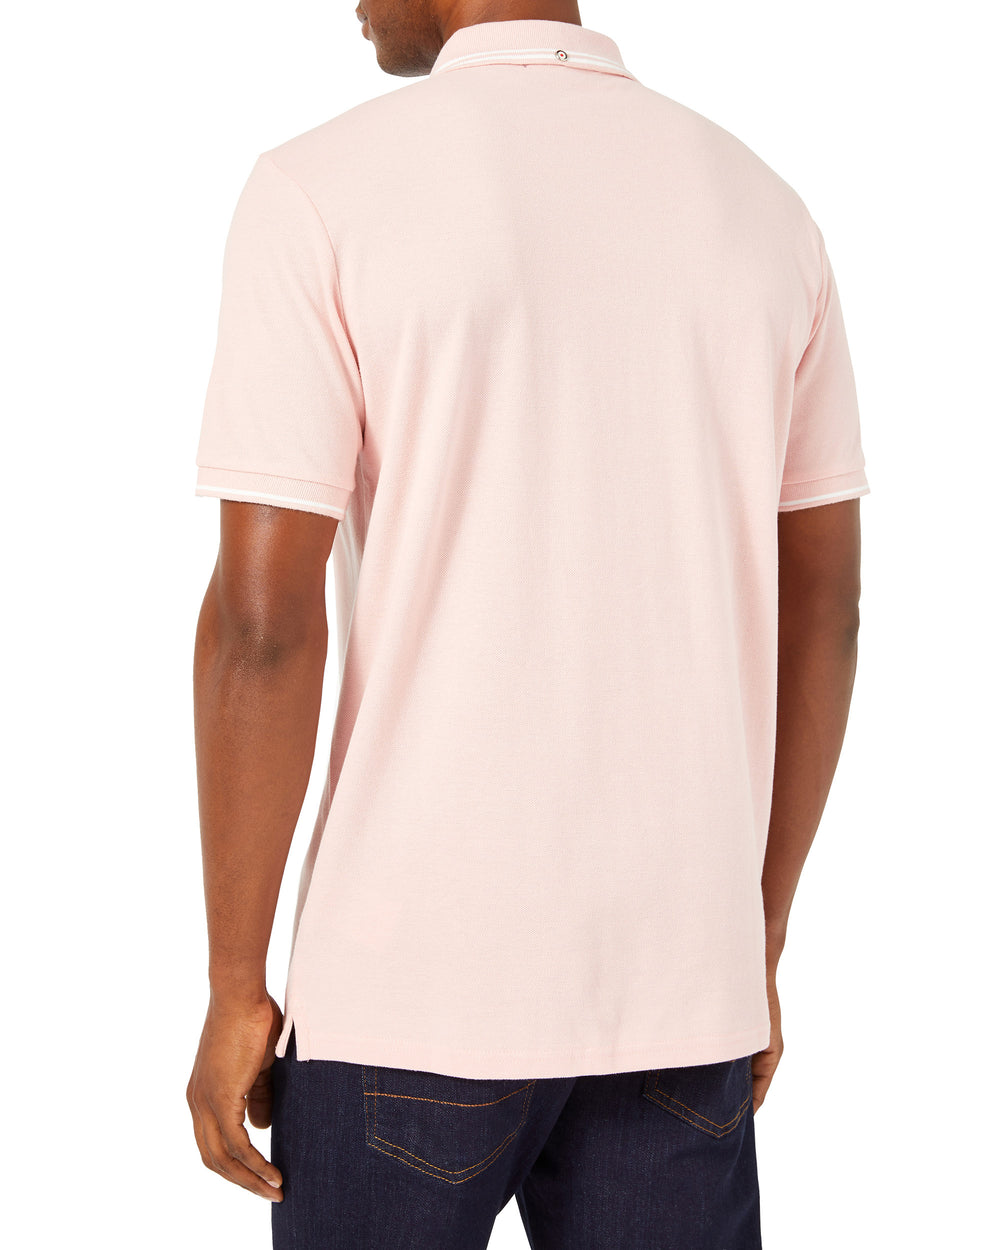 Script Tipped Pique Polo Shirt - Light Pink/White